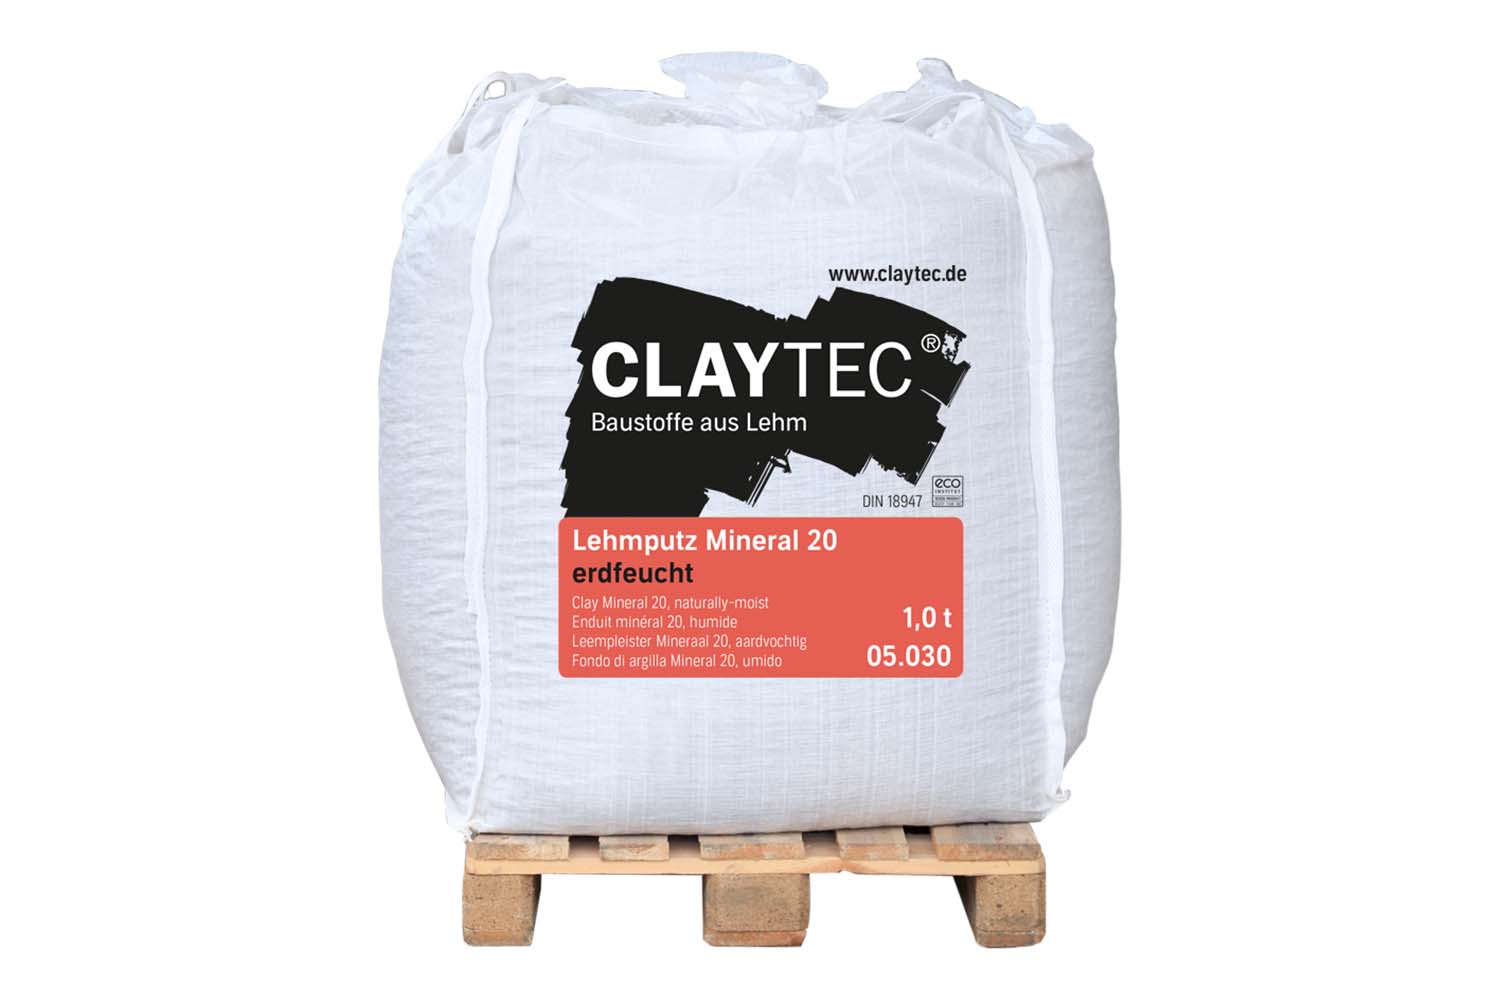 Claytec Lehmputz Mineral 20 erdfeucht